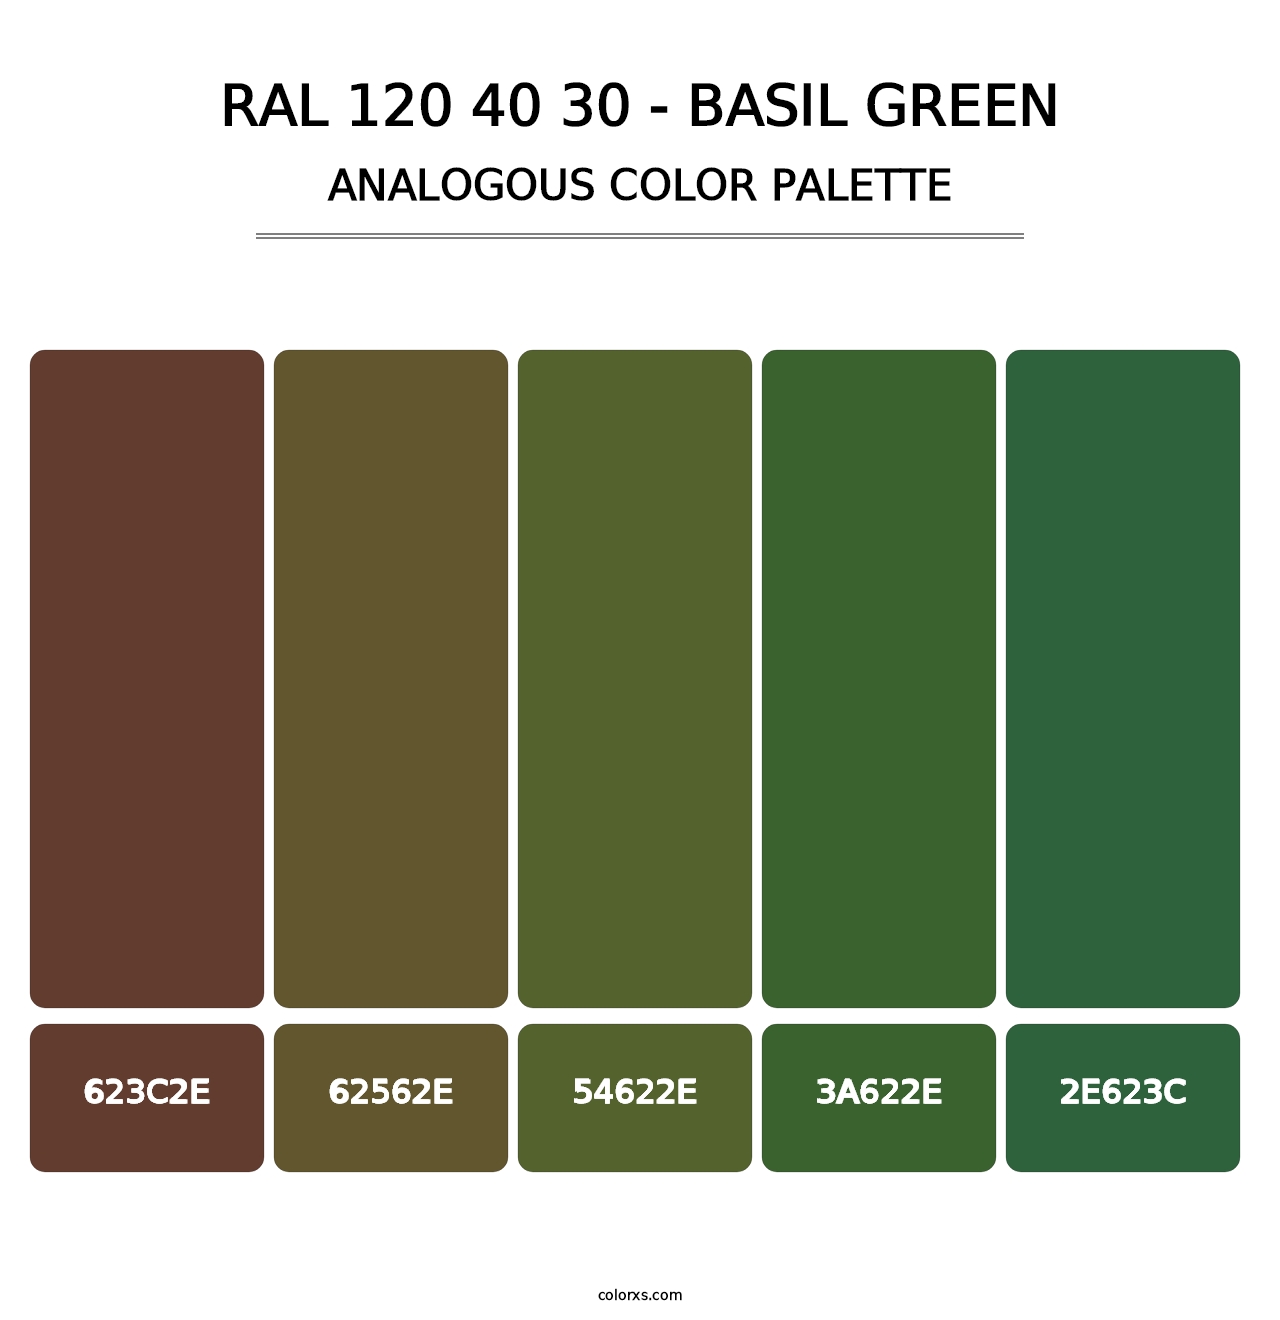 RAL 120 40 30 - Basil Green - Analogous Color Palette